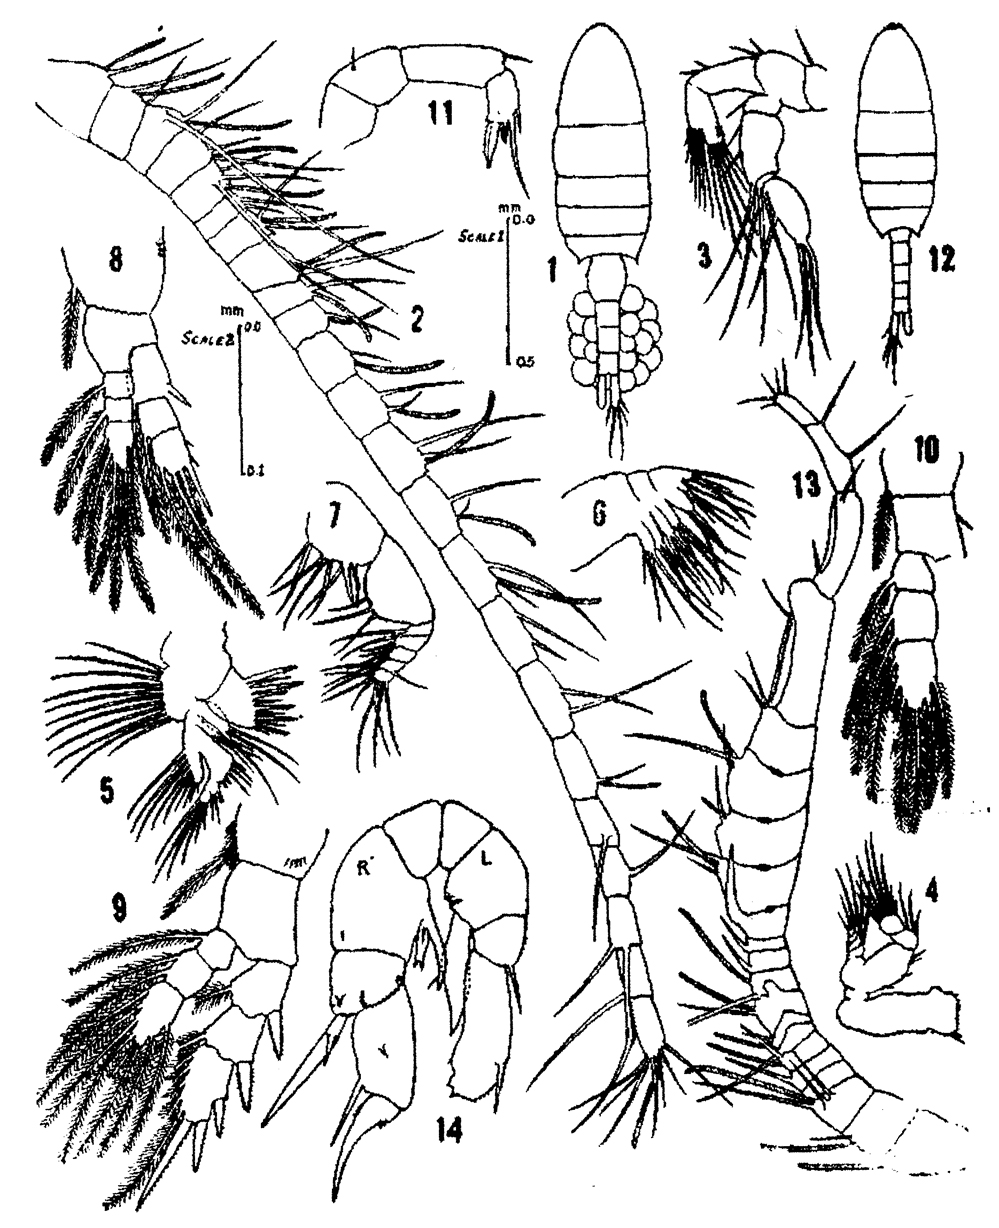 Espèce Pseudodiaptomus ardjuna - Planche 1 de figures morphologiques